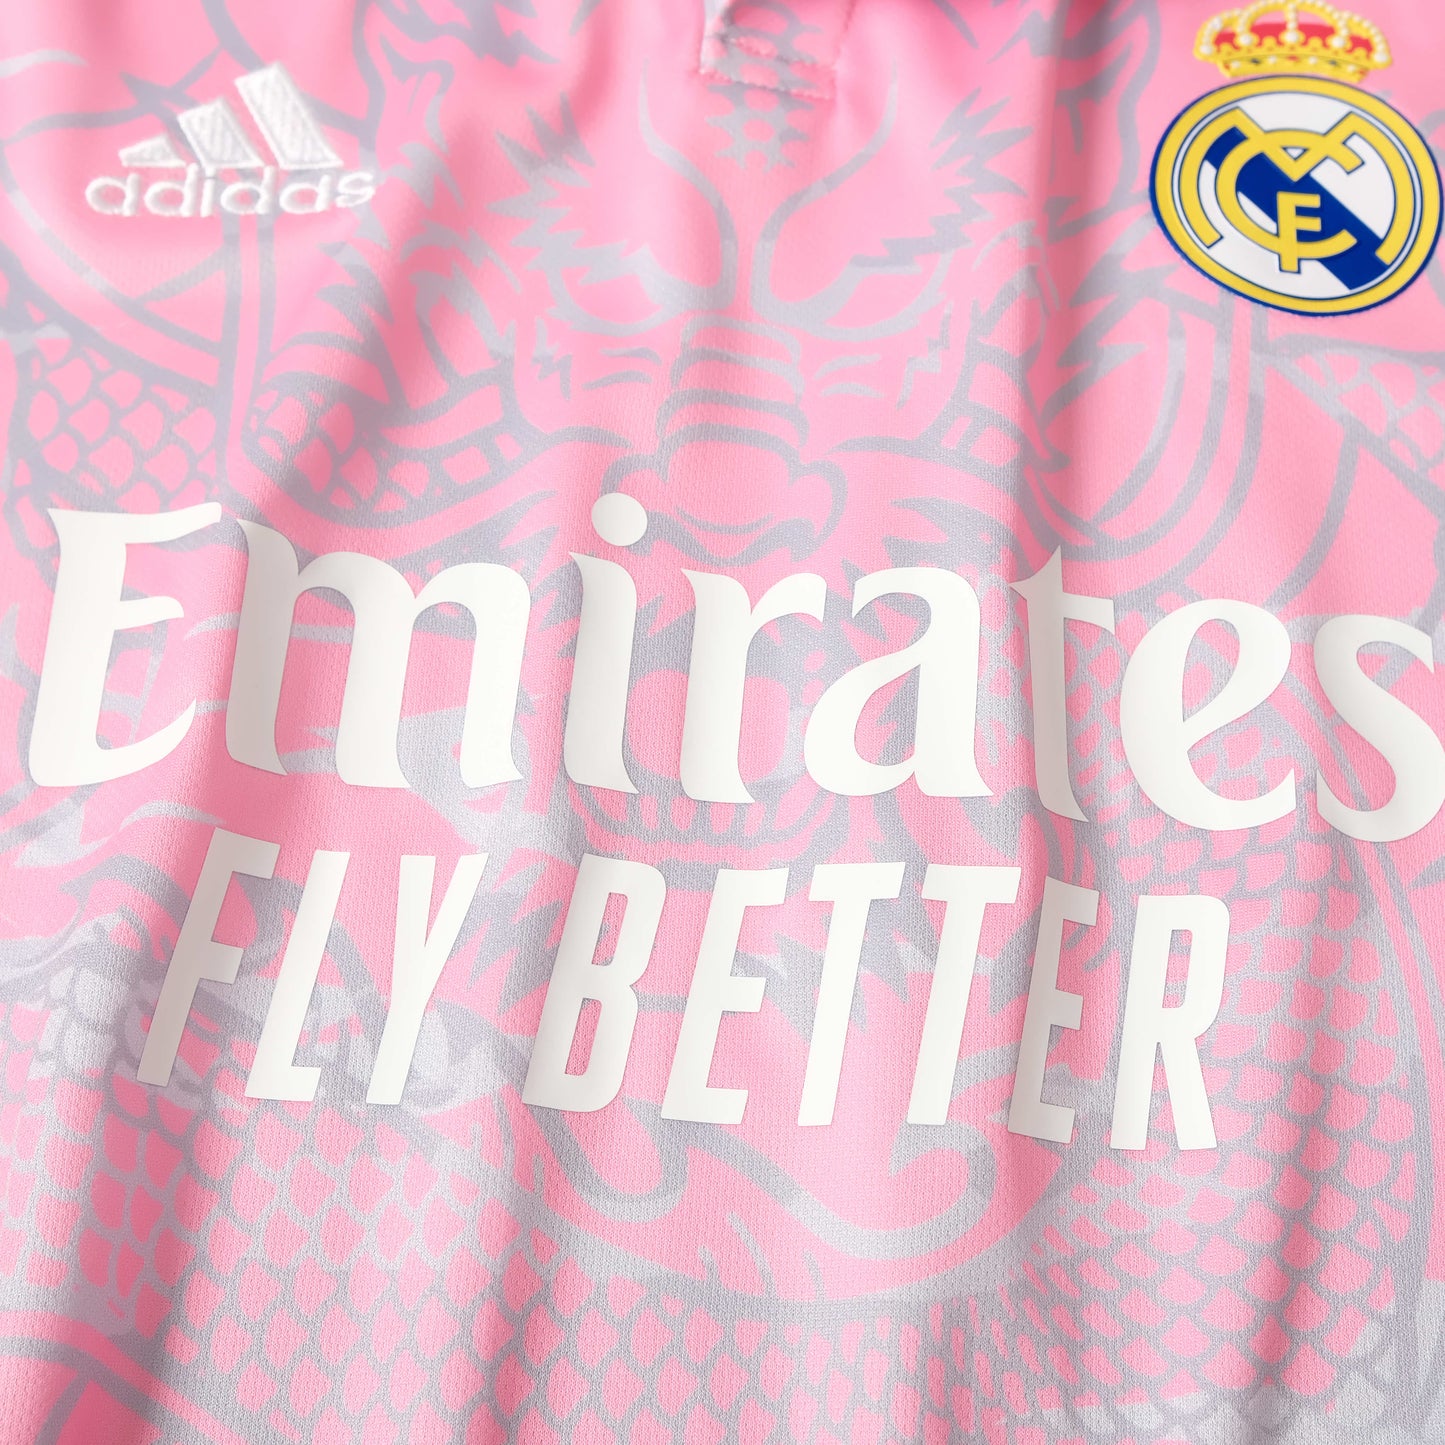 Real Madrid 23/24 "Pink Dragon" Jersey